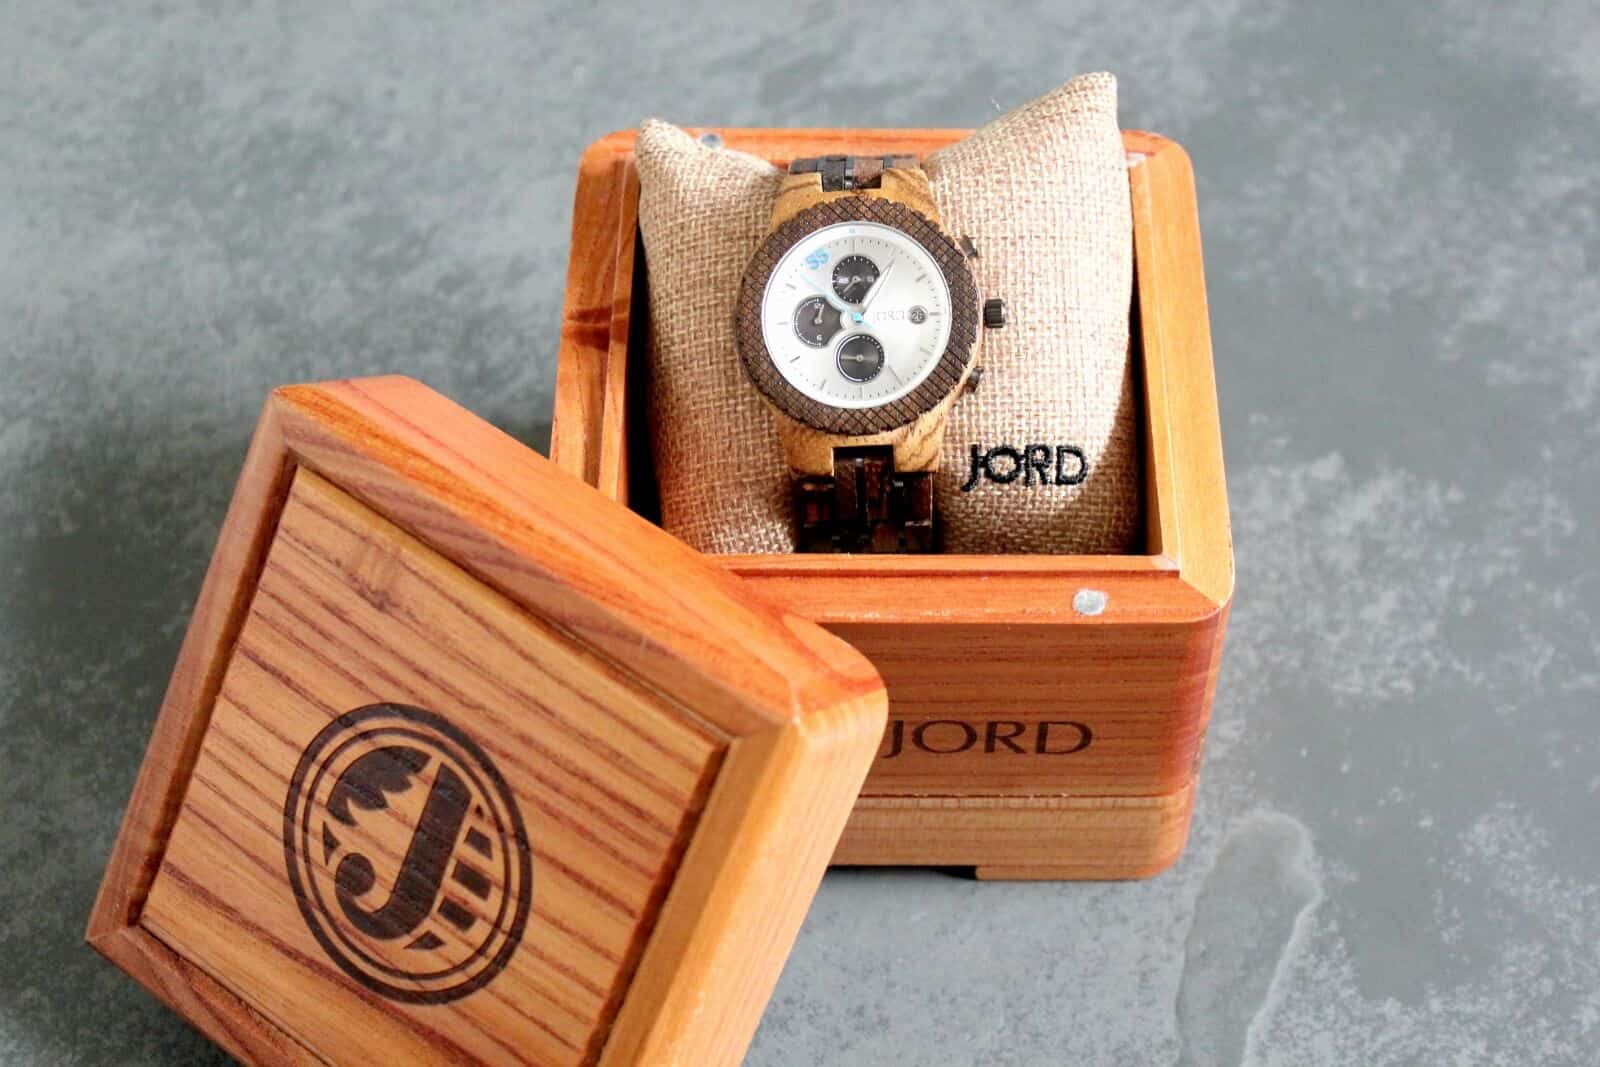 Jord watch in wooden box.